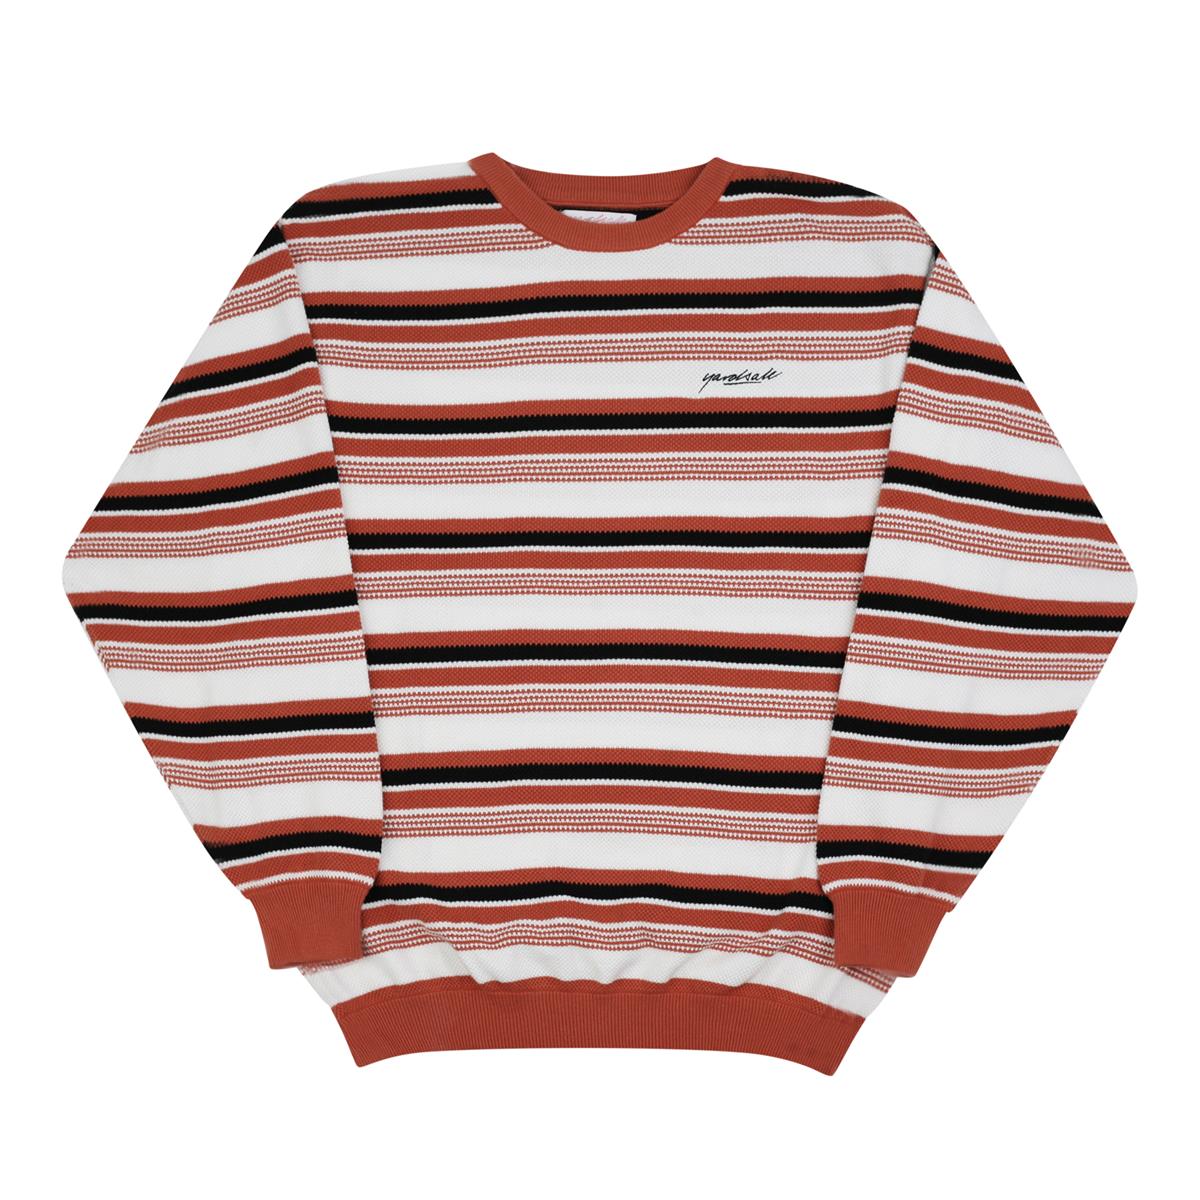 Louis Vuitton LV Drip Hoodie Hooded Sweatshirt Sweater T-Shirt Tee